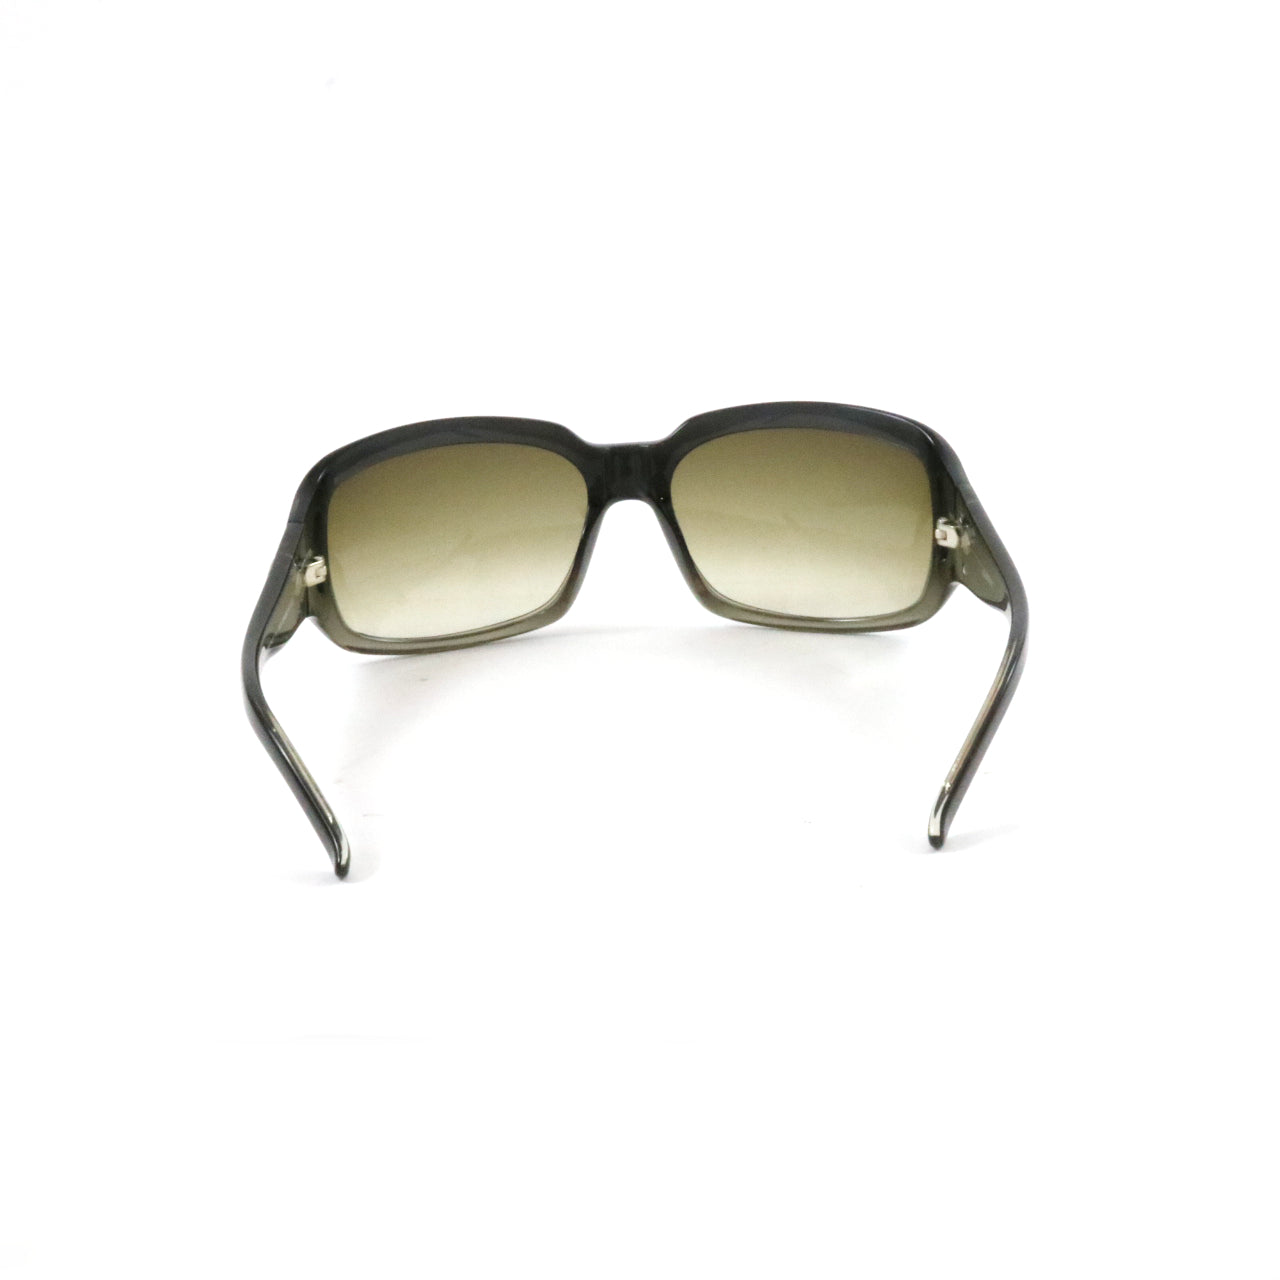 Sunglasses 5507/s